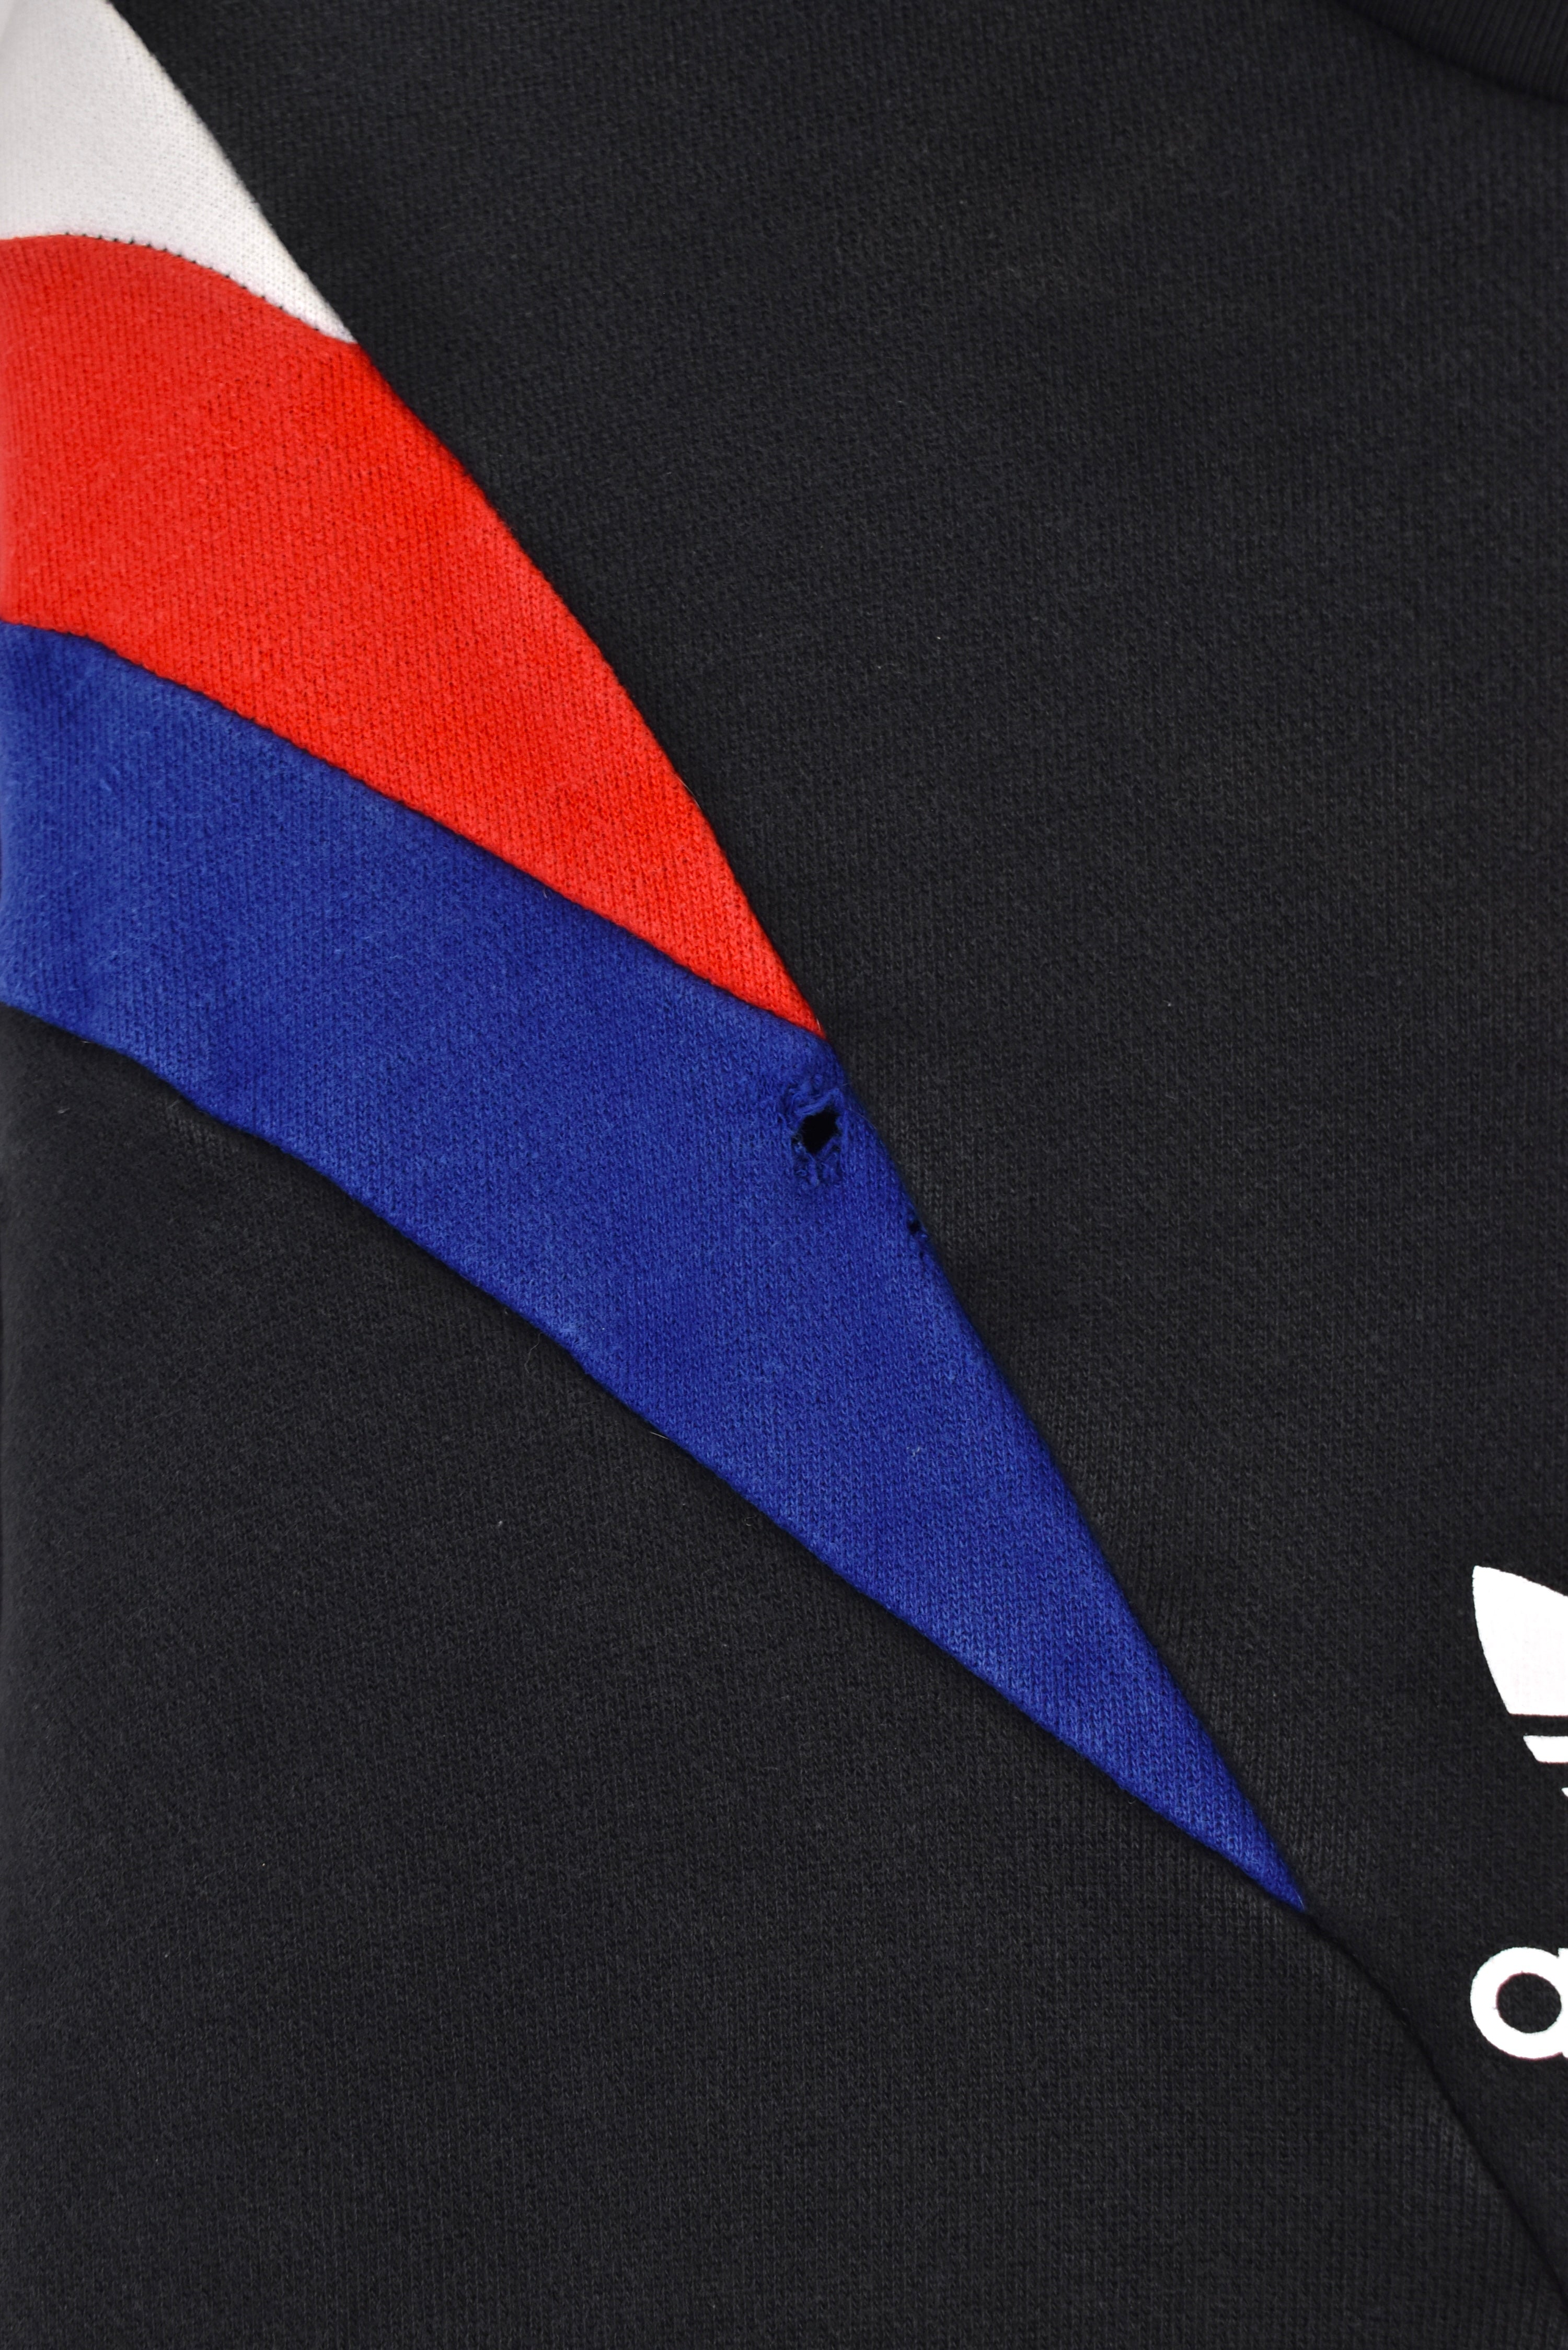 Vintage Adidas sweatshirt (M), black graphic crewneck